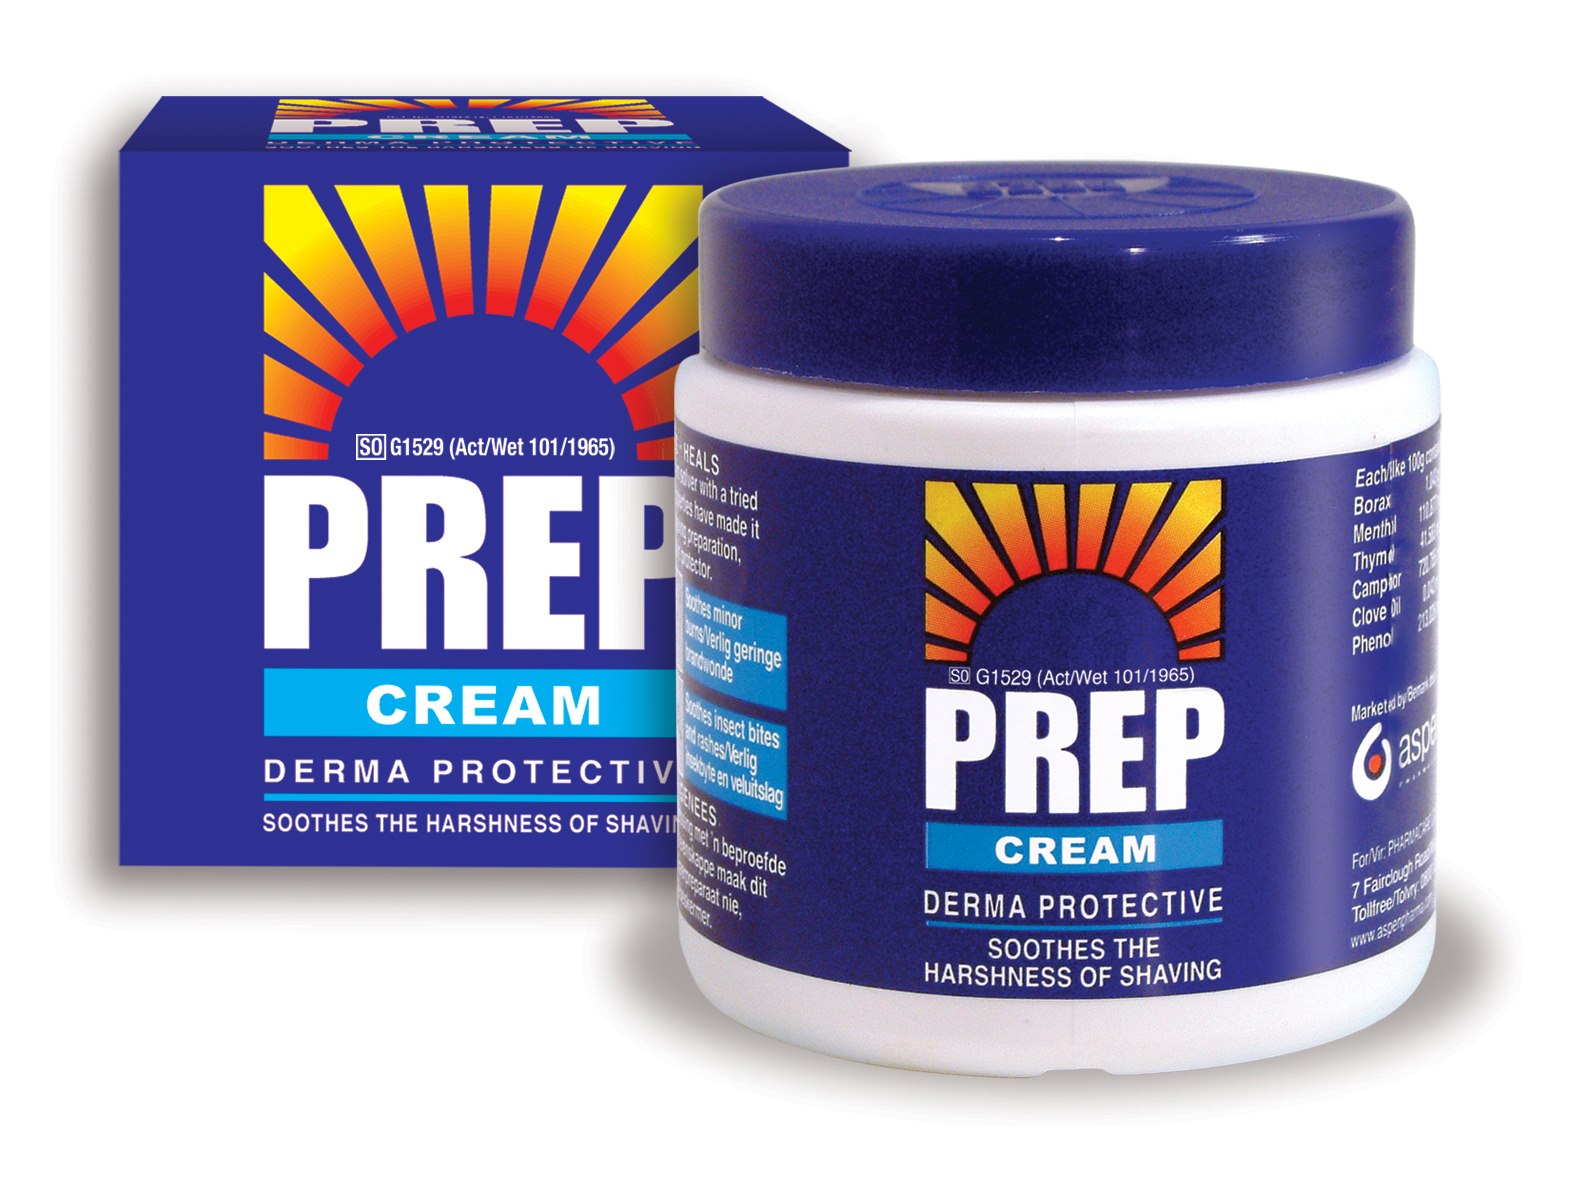 Prep Cream - Derma protective Cream 250g tub